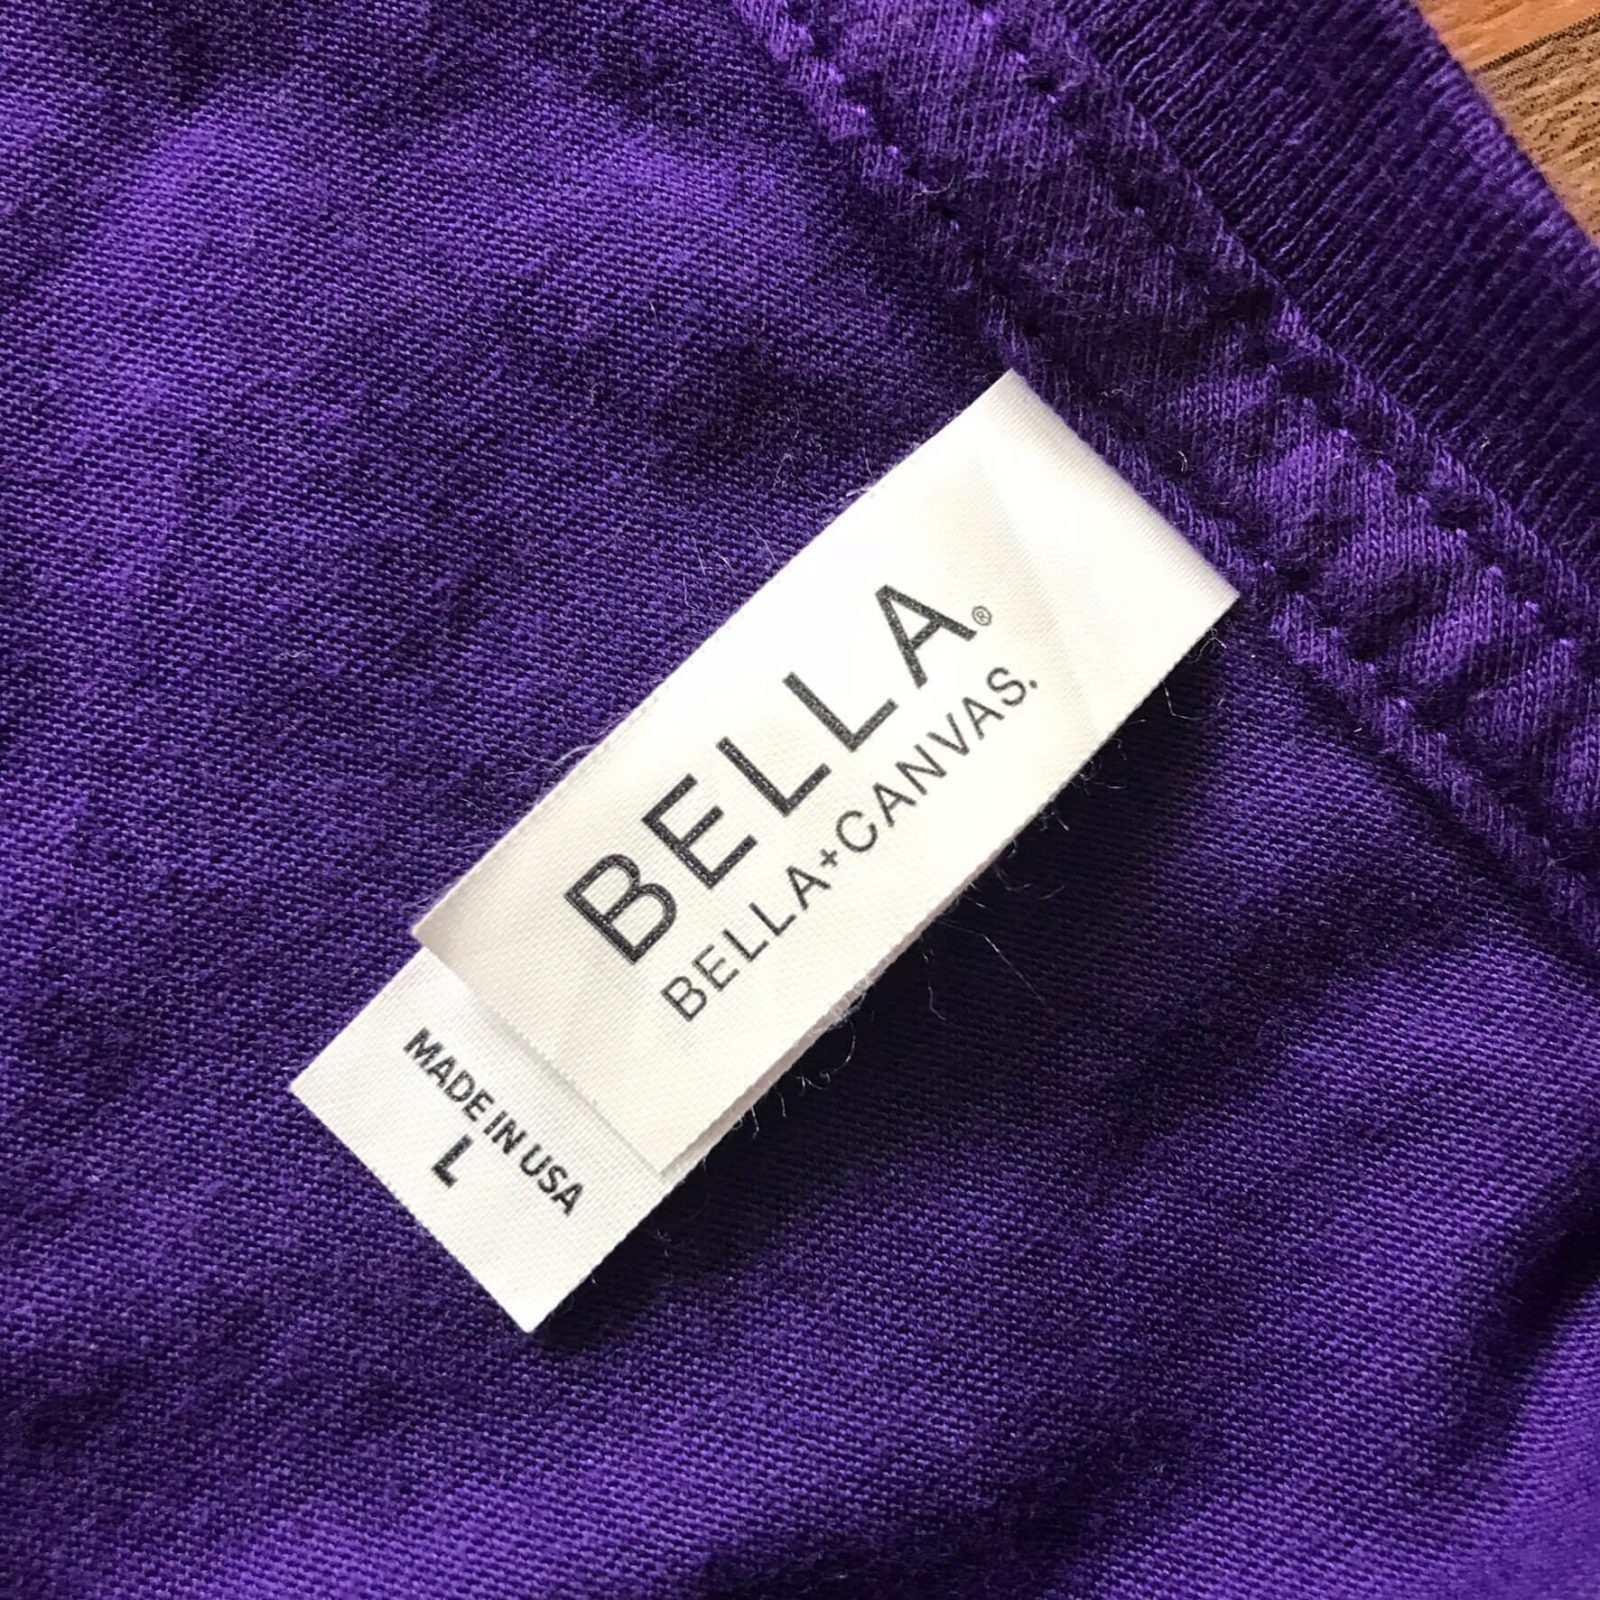 Bella brand t-shirt